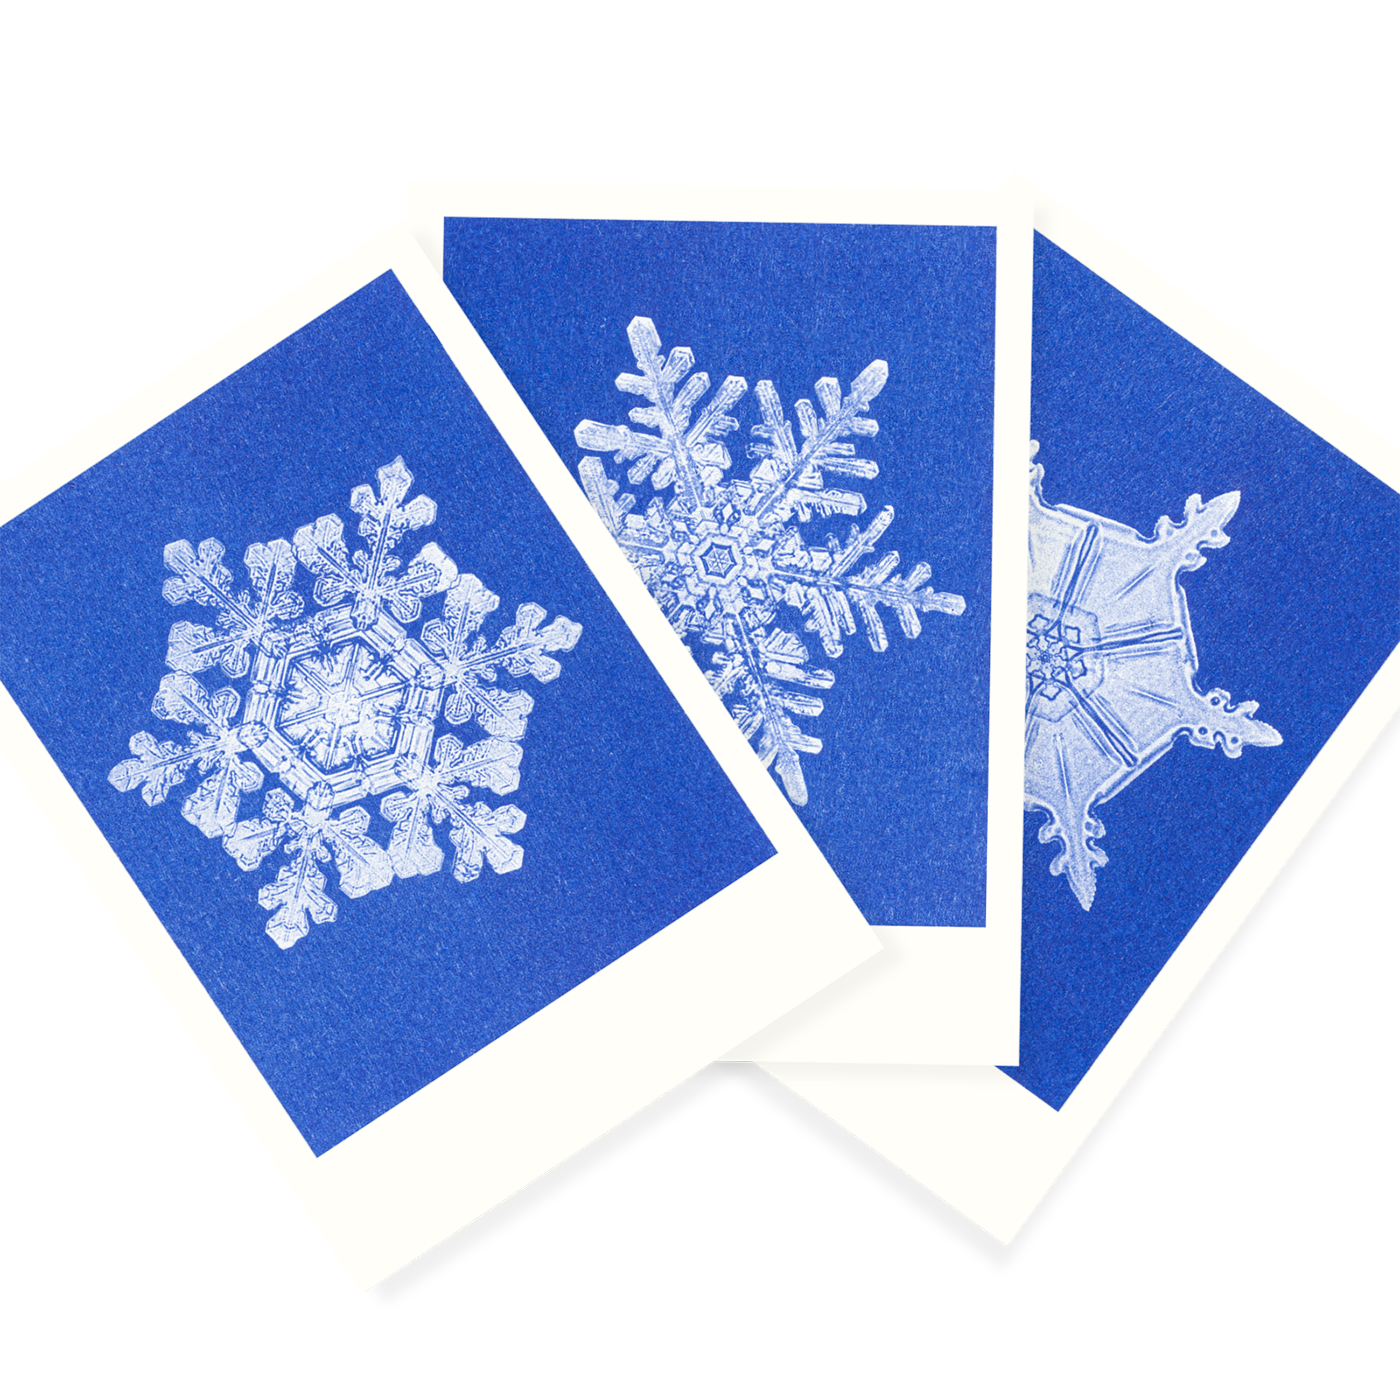 Schneeflocken | Snowflakes | 3 Risograph Postcards